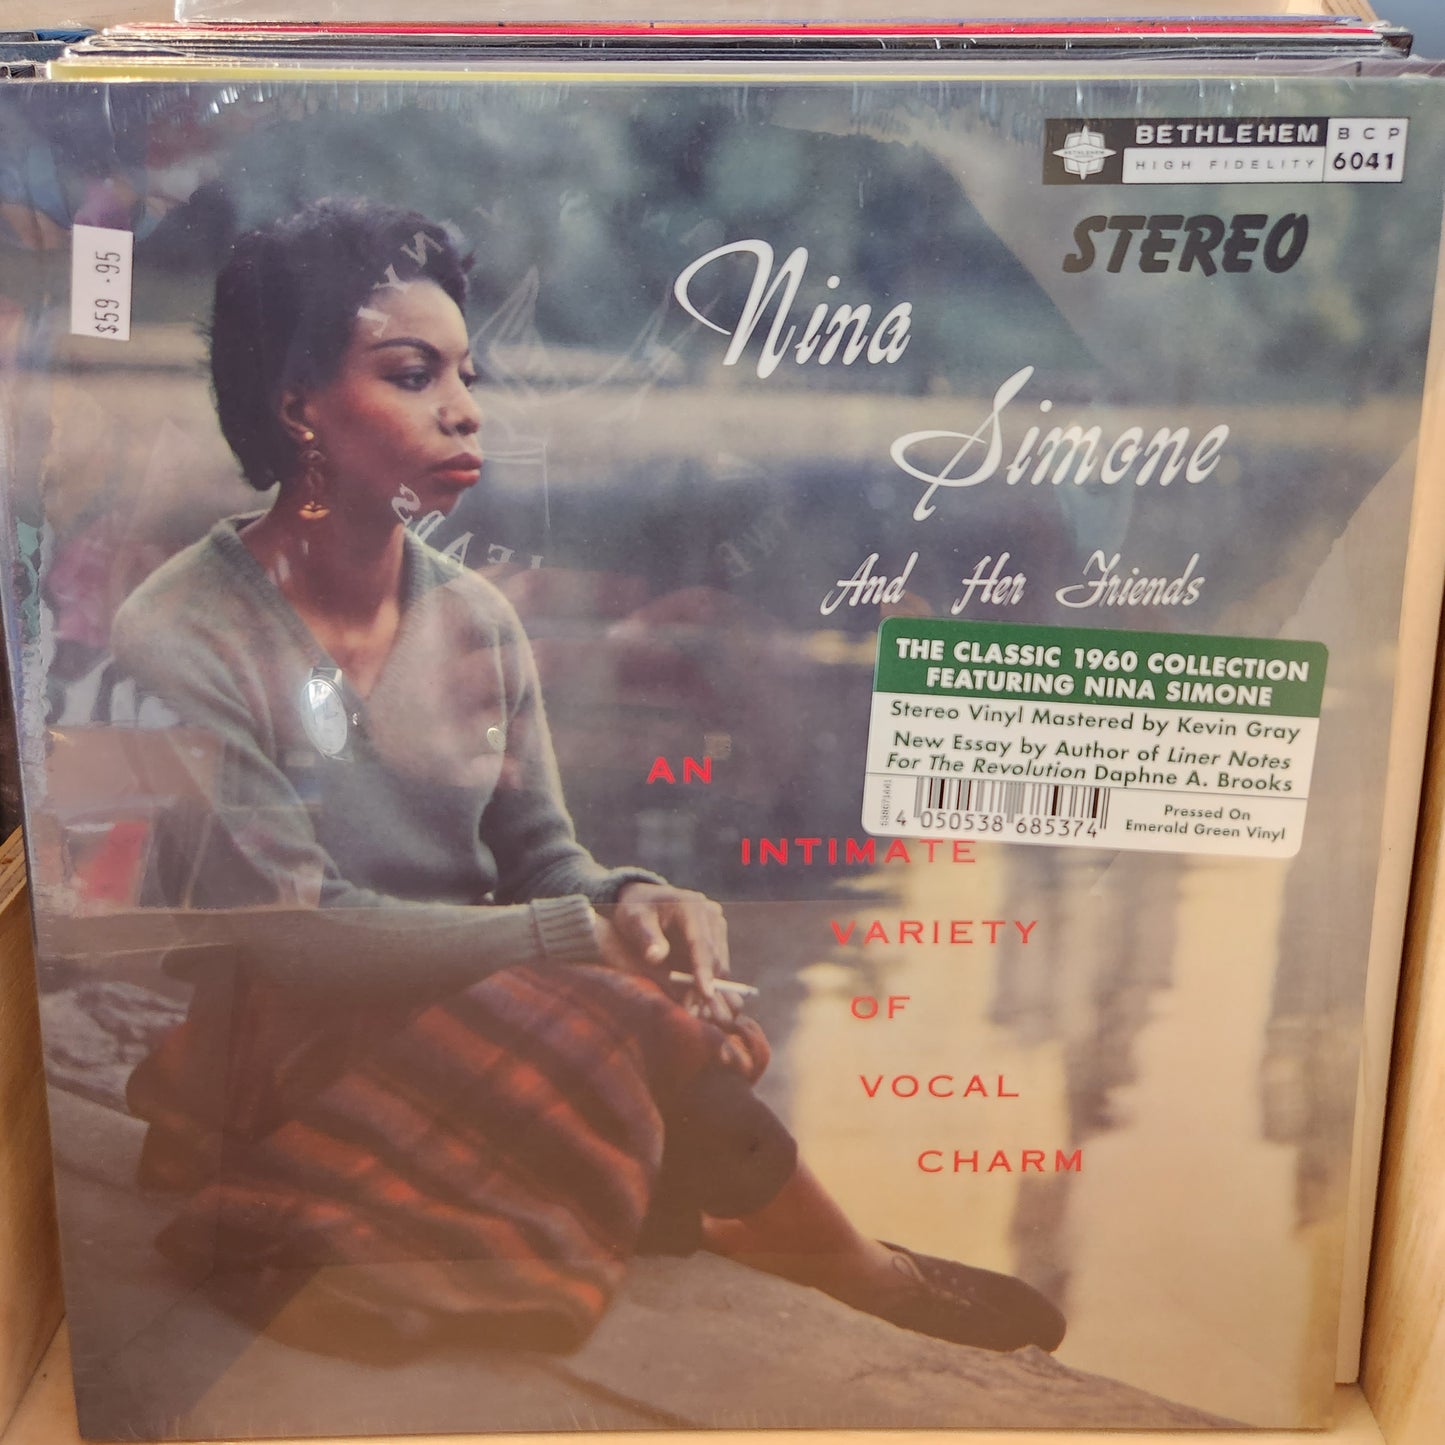 Nina Simone - Nina Simone and her Friends - Vinyl LP